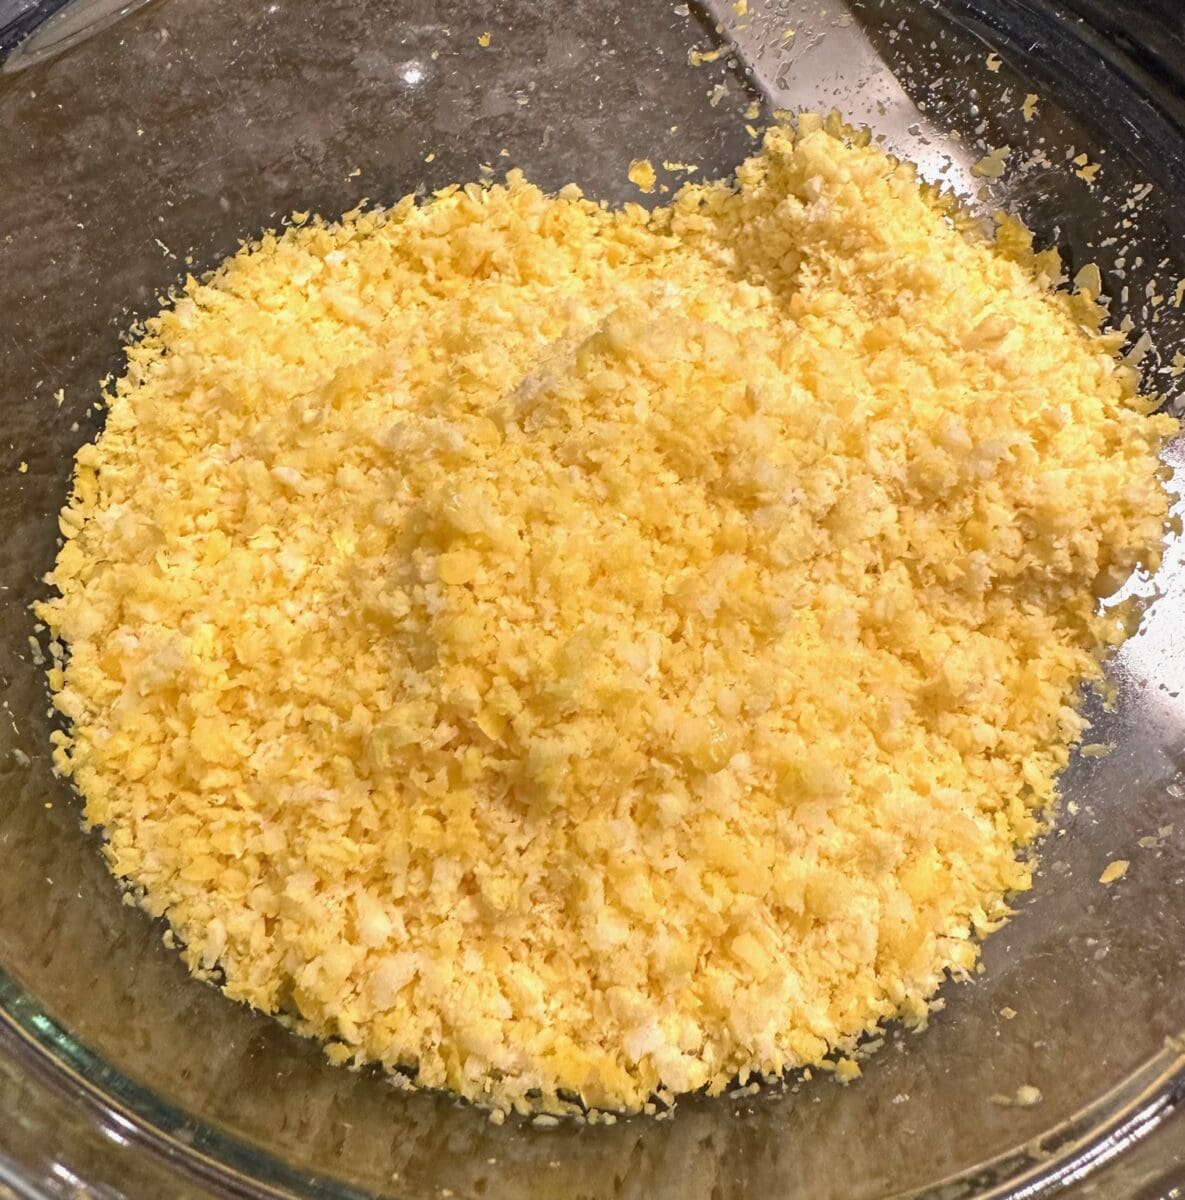 corn powder